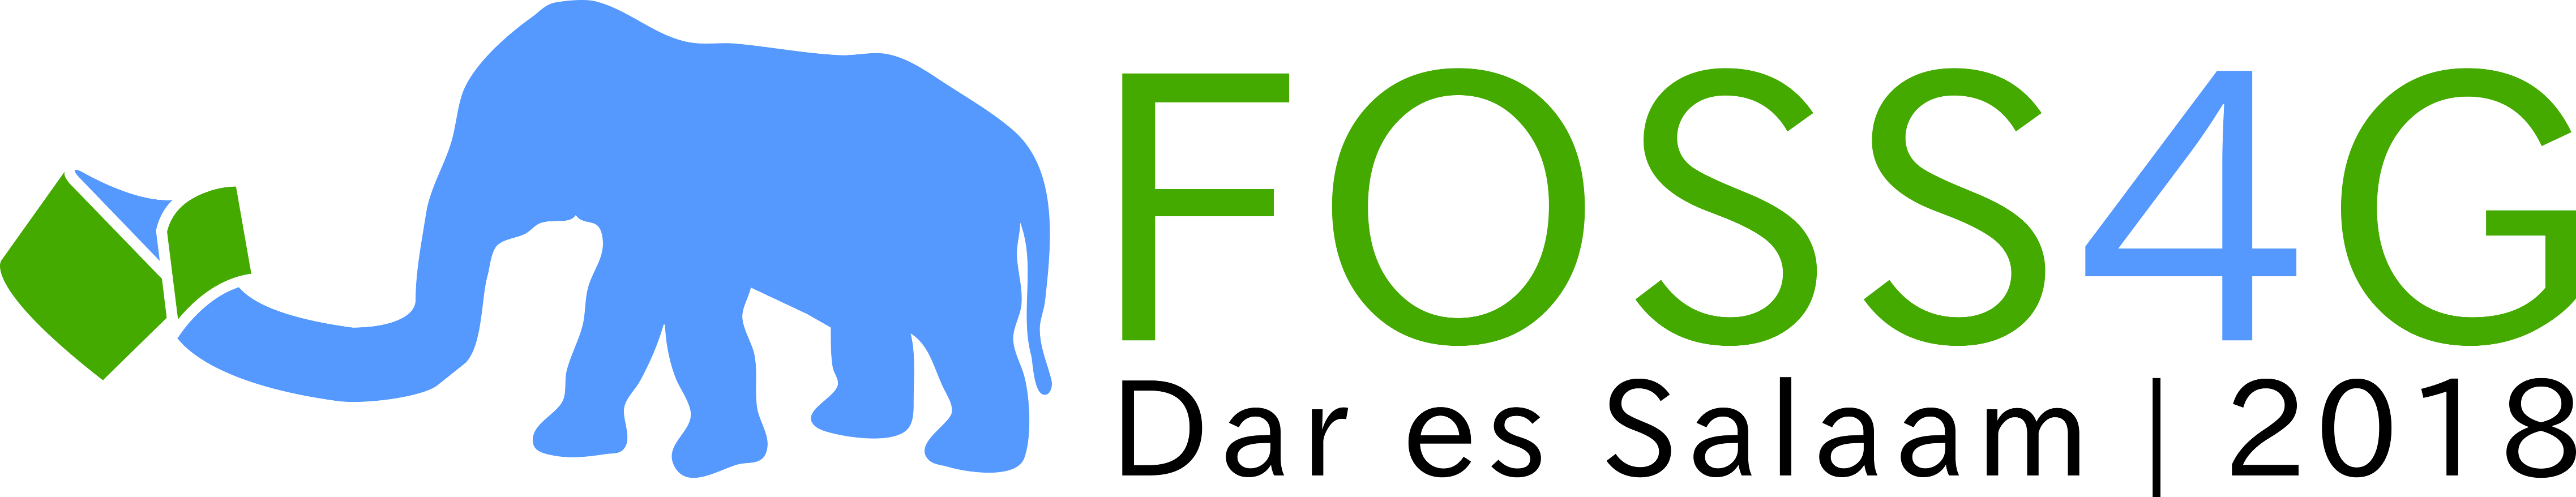 FOSS4G logo proposal by Johannes